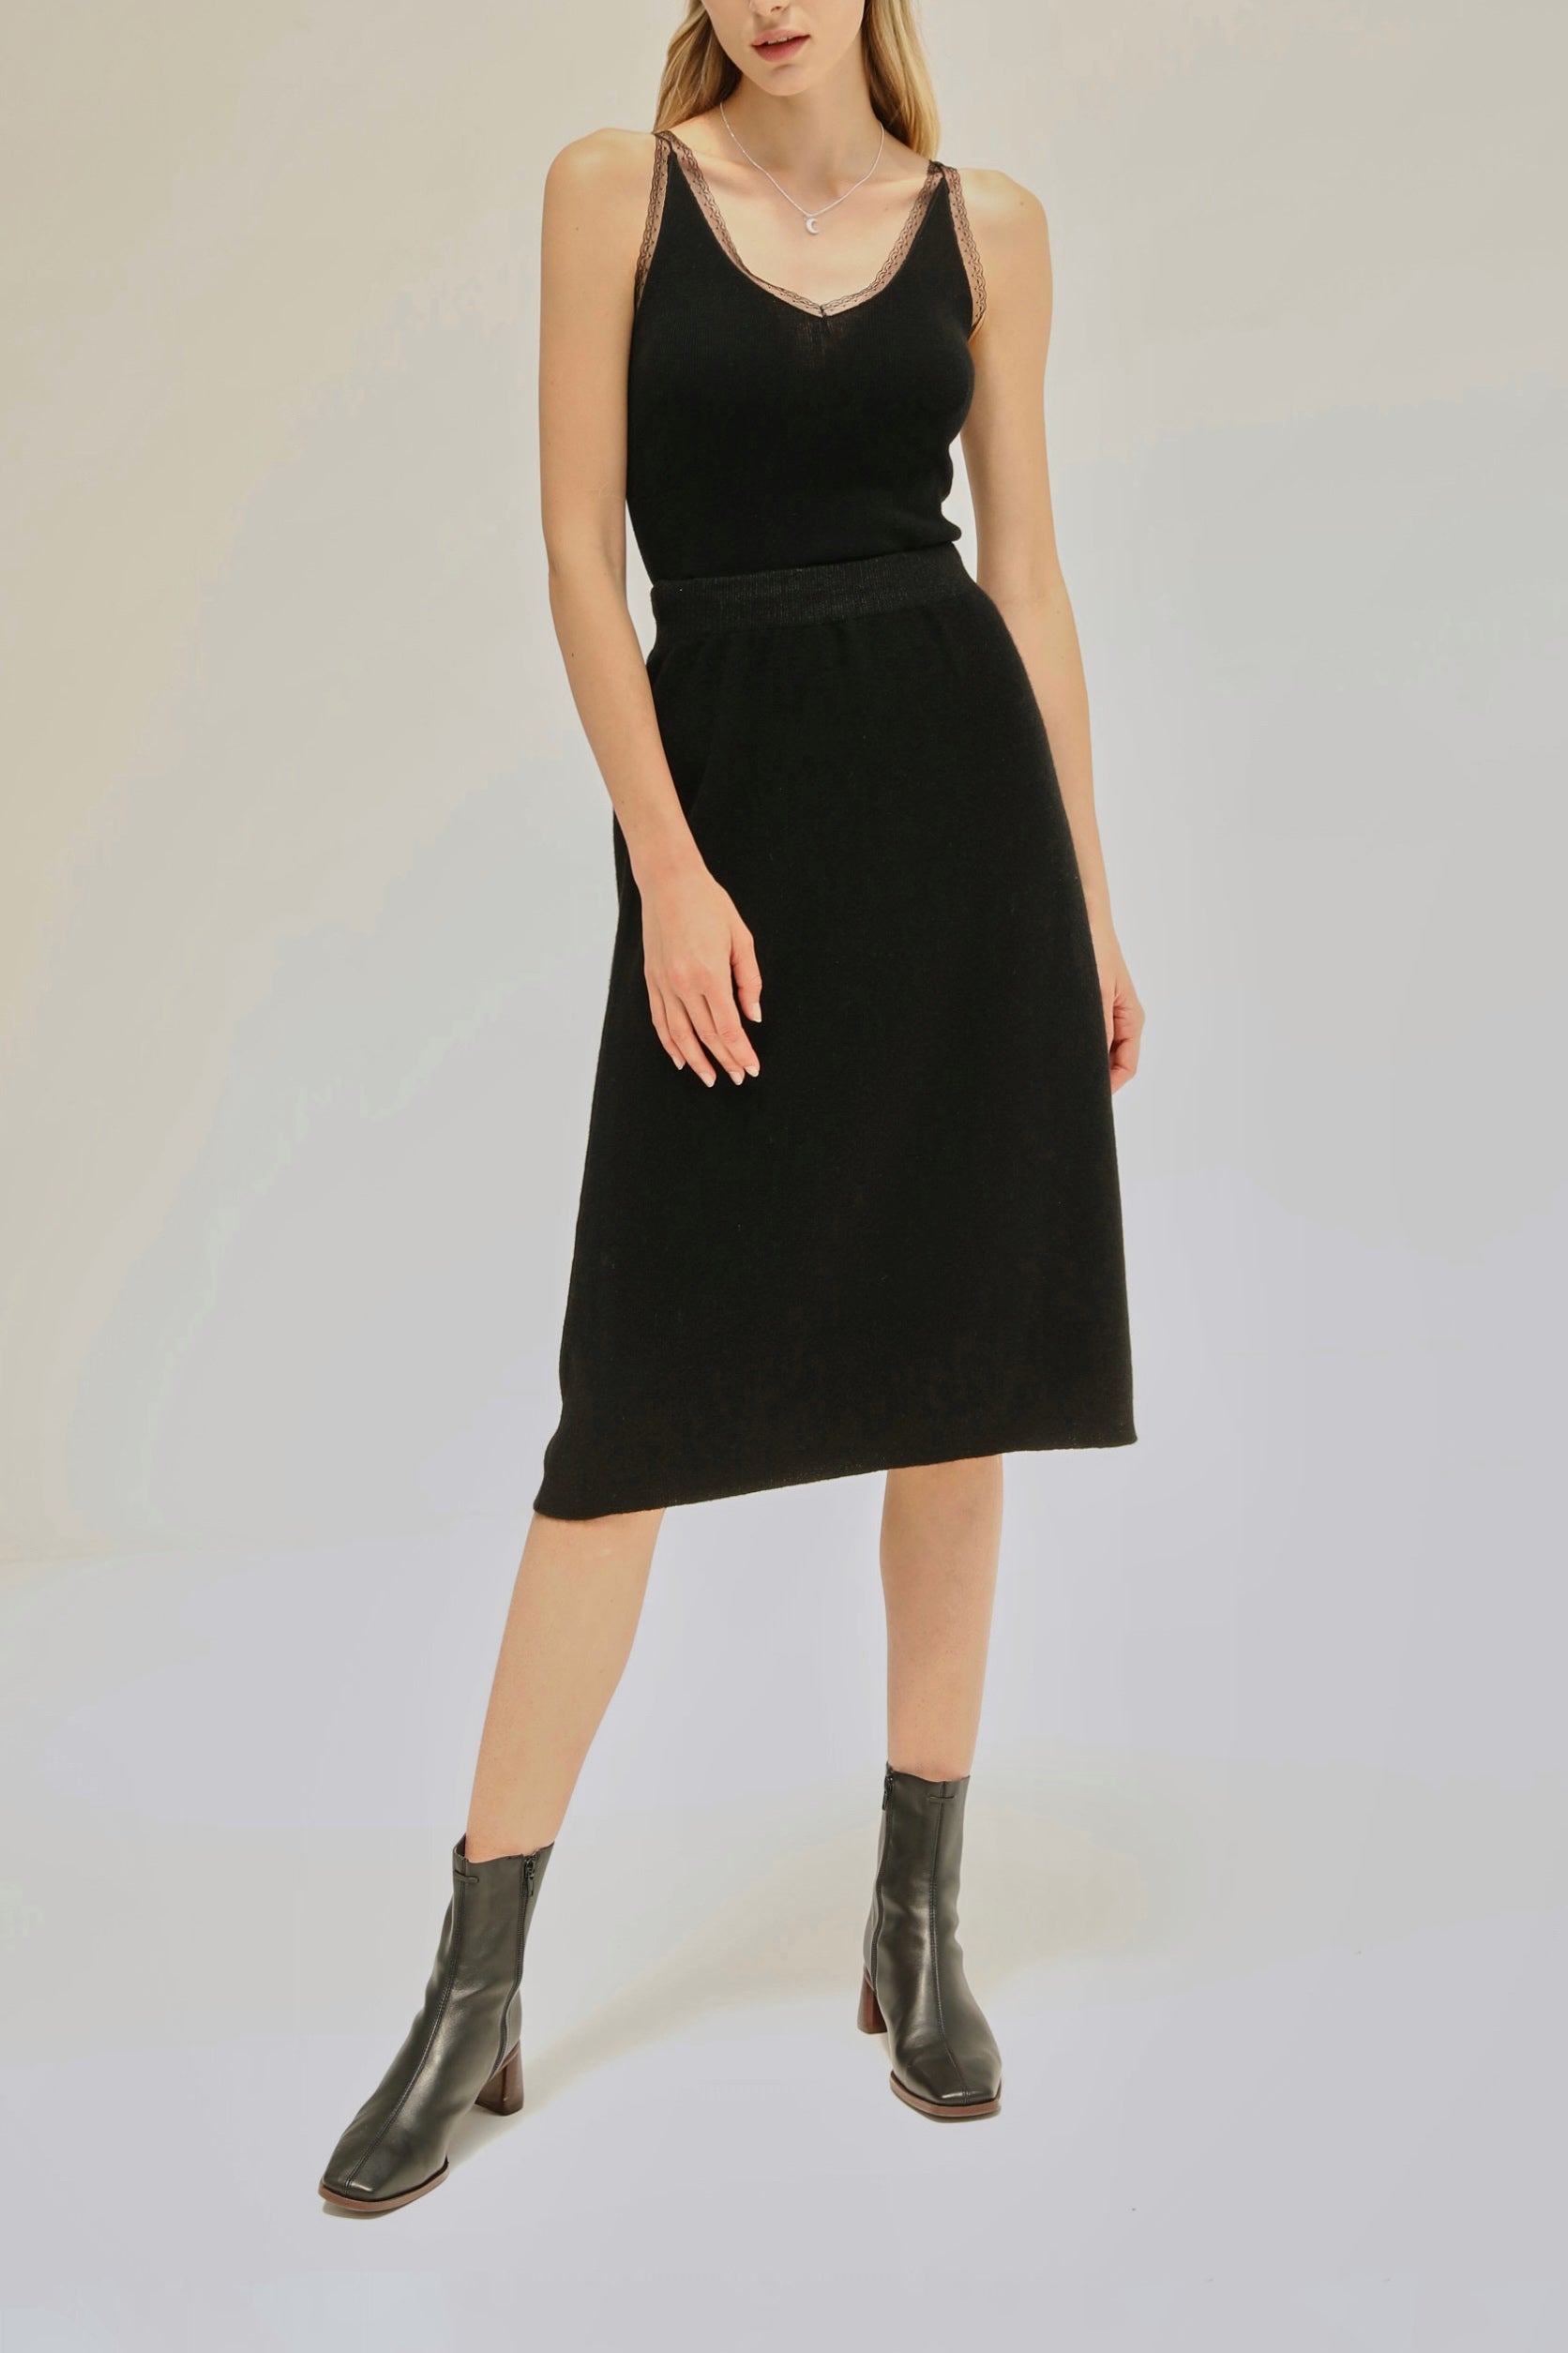 Winter Archive Wool Skirt - Black